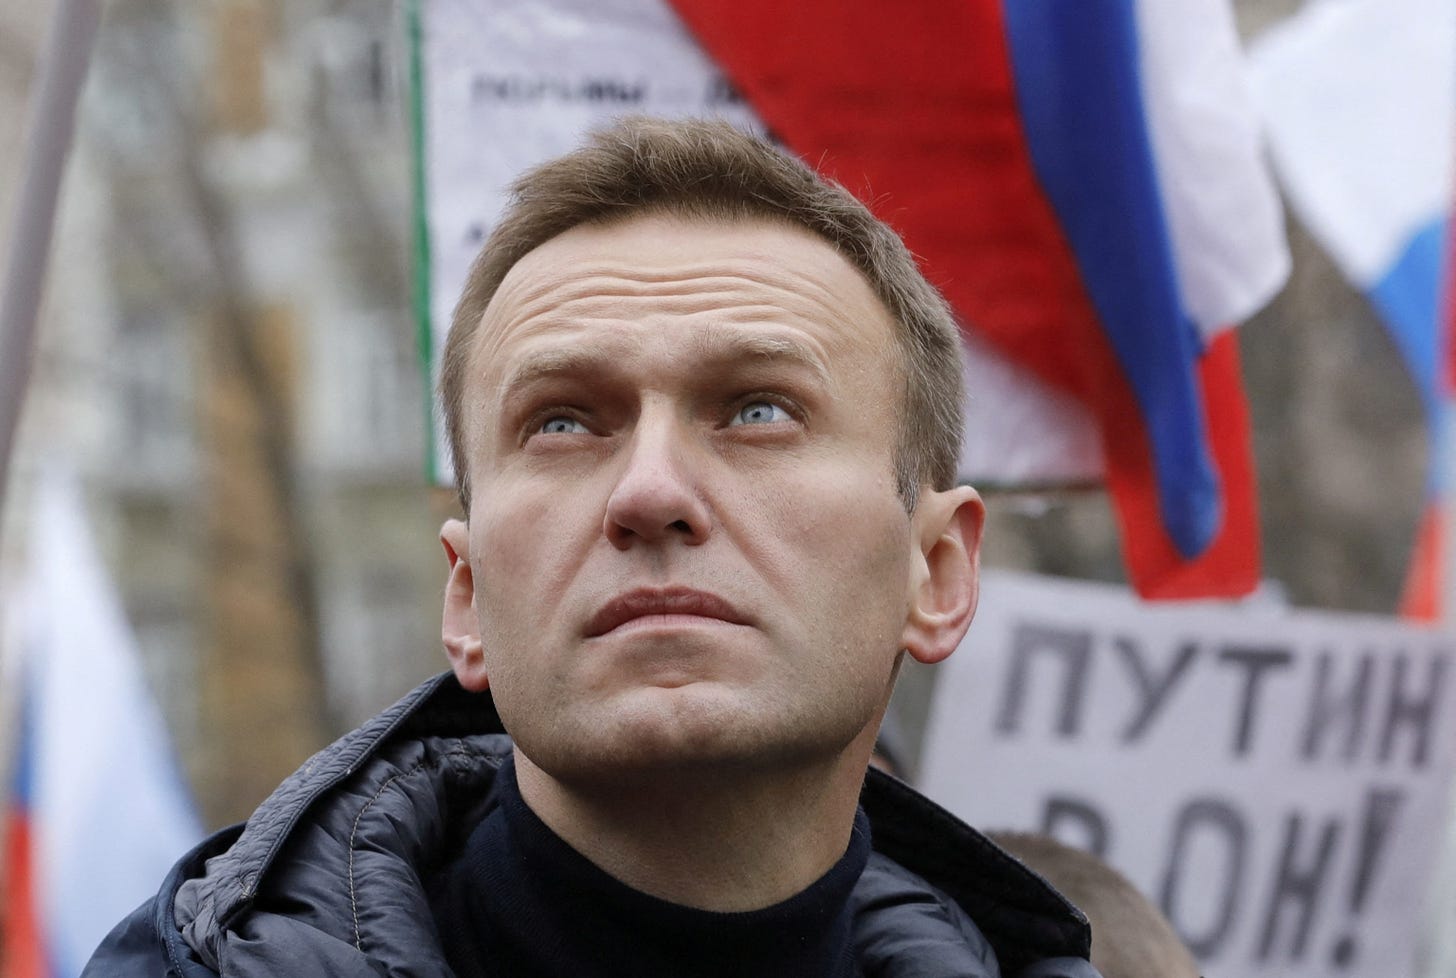 Russian authorities hand over Alexei Navalny's body to his mother,  spokeswoman says - ABC News